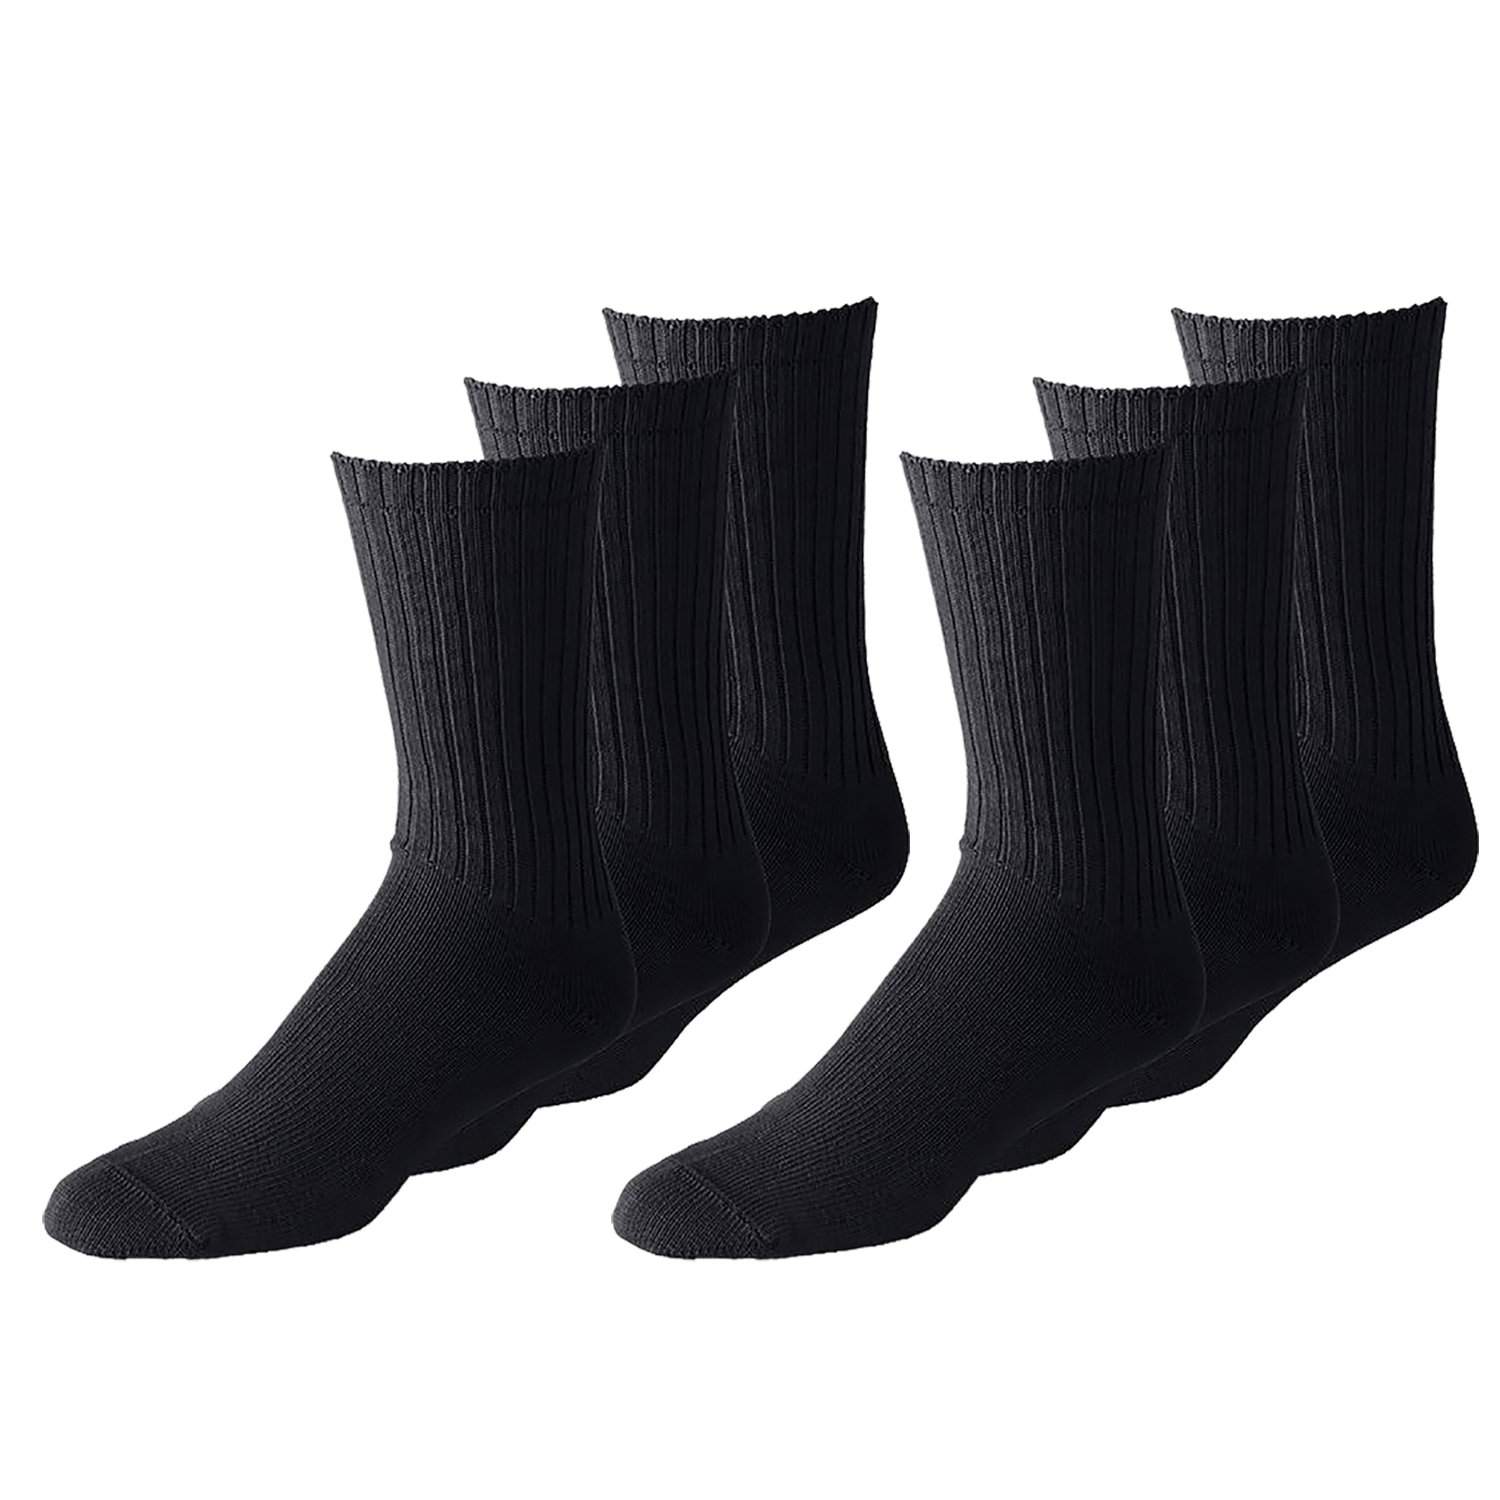 60 Pairs Women's Athletic Crew Socks - Bulk Wholesale Packs - Any Shoe Size